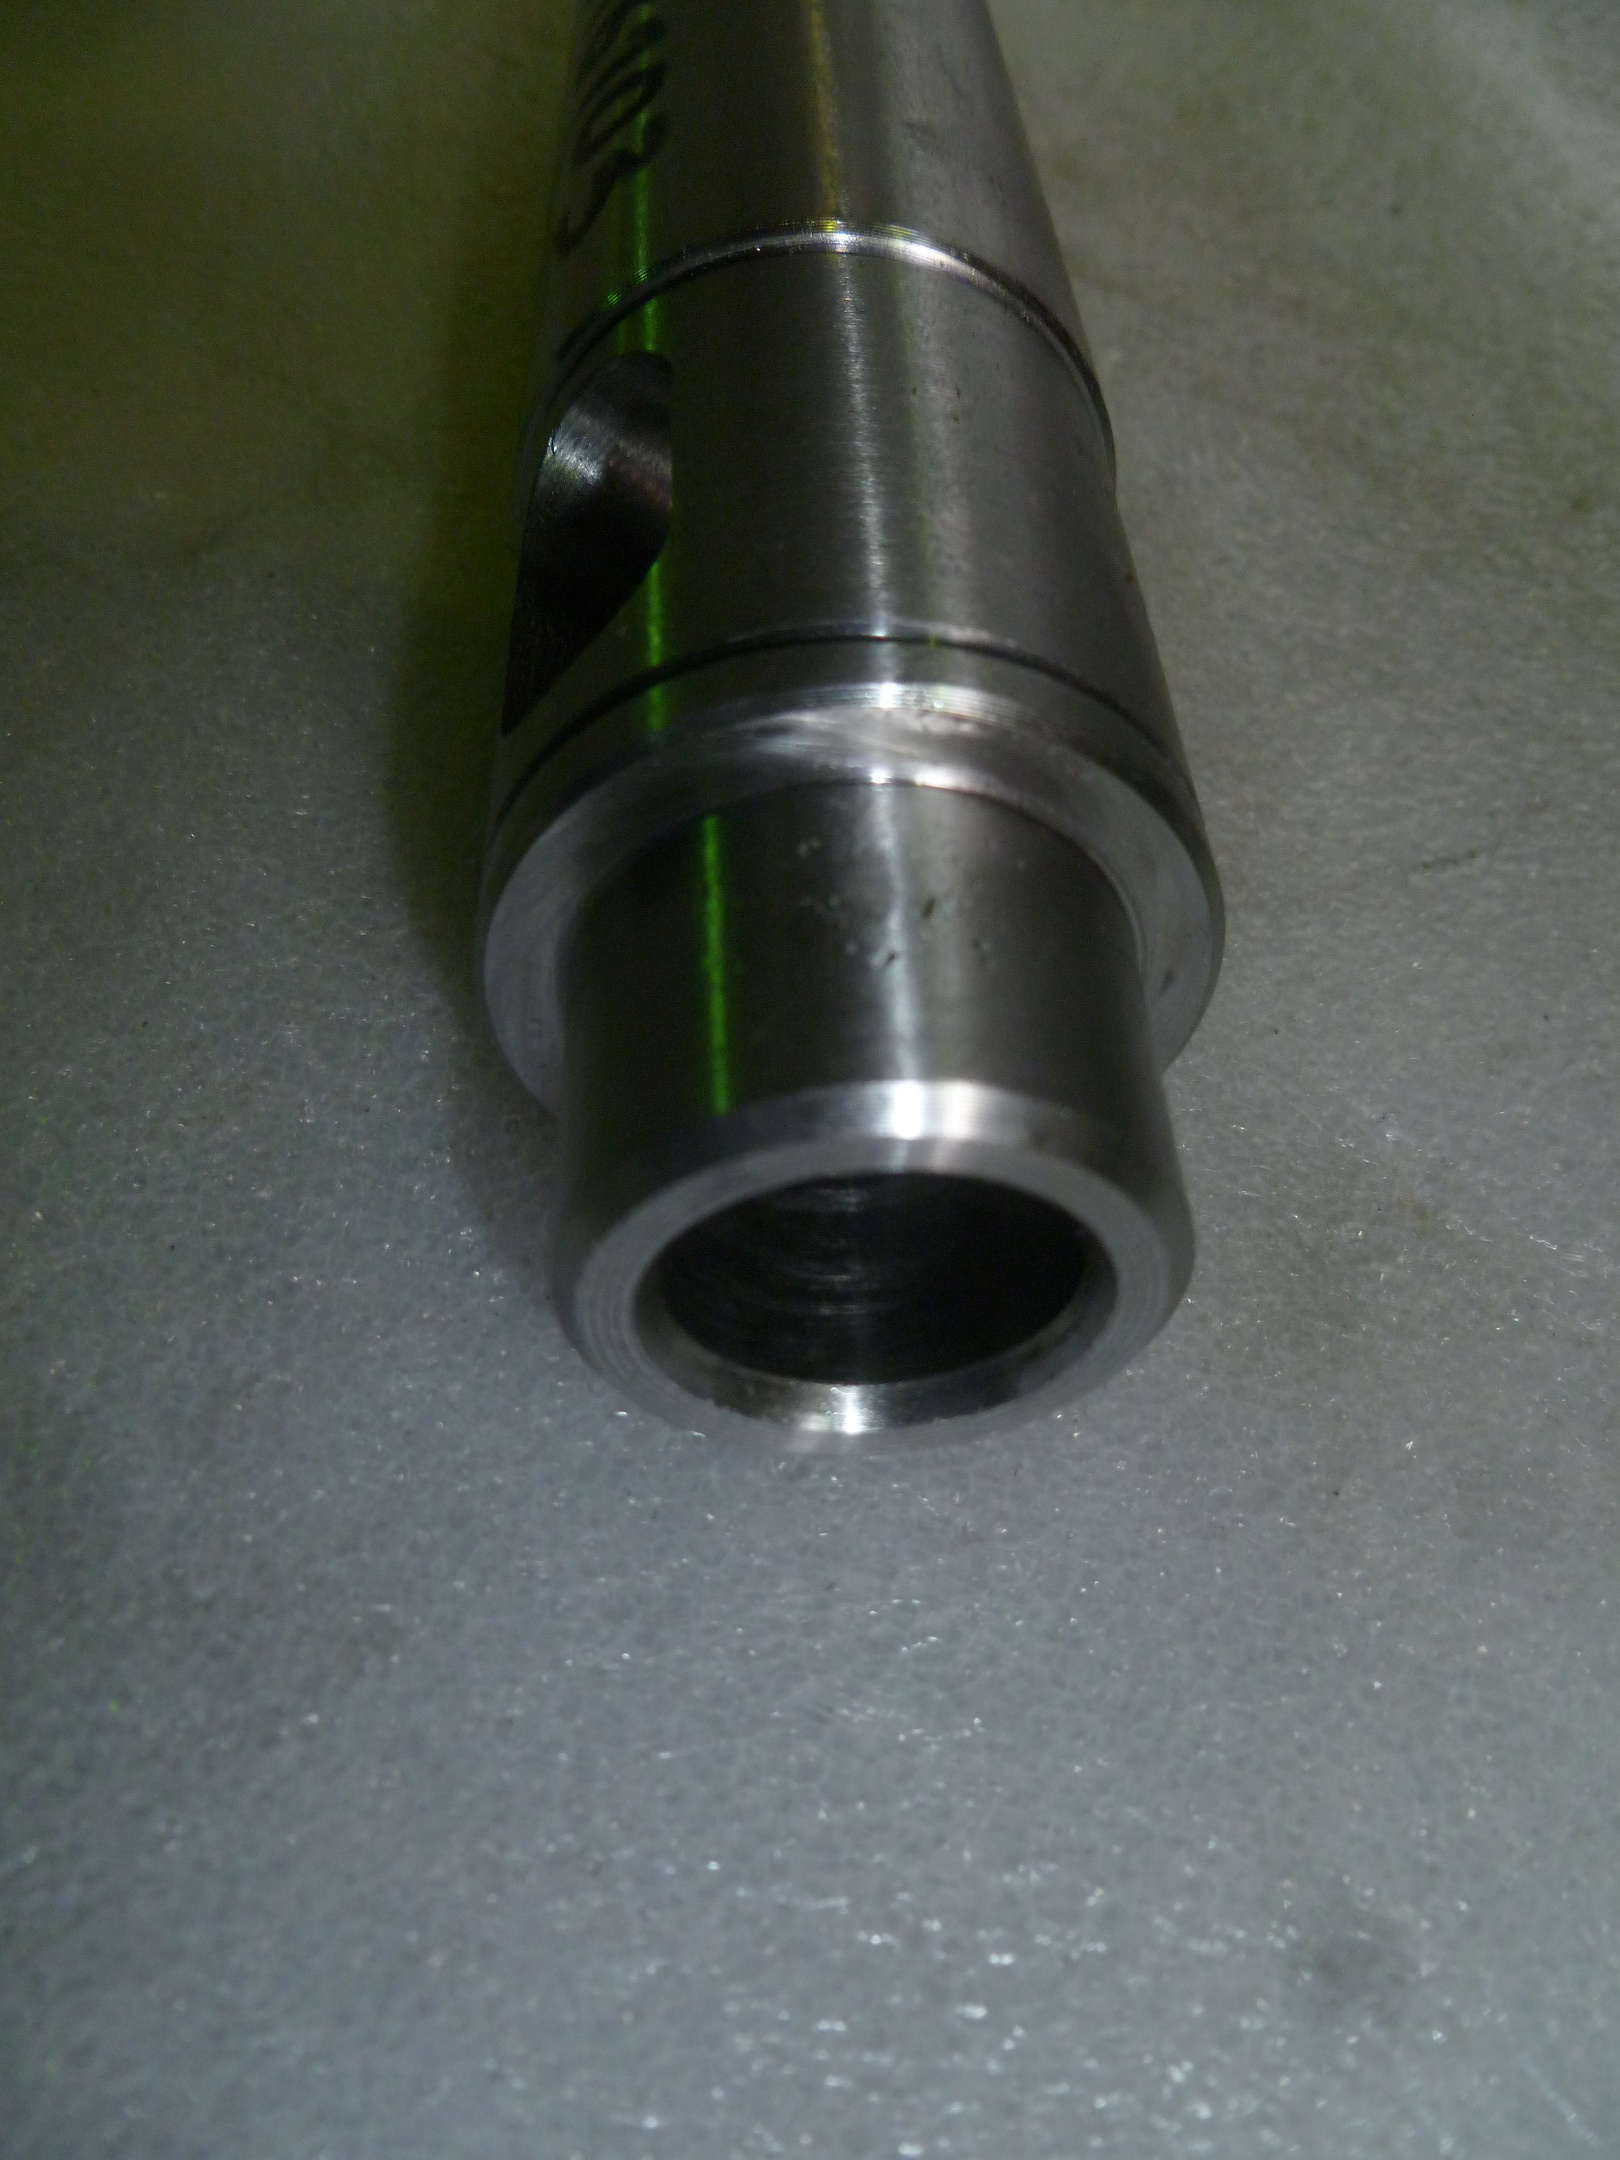 Вал ведомый TSS-WP160-170/Ecc.rotary shaft, driven ,№29 (CNP300024-29)